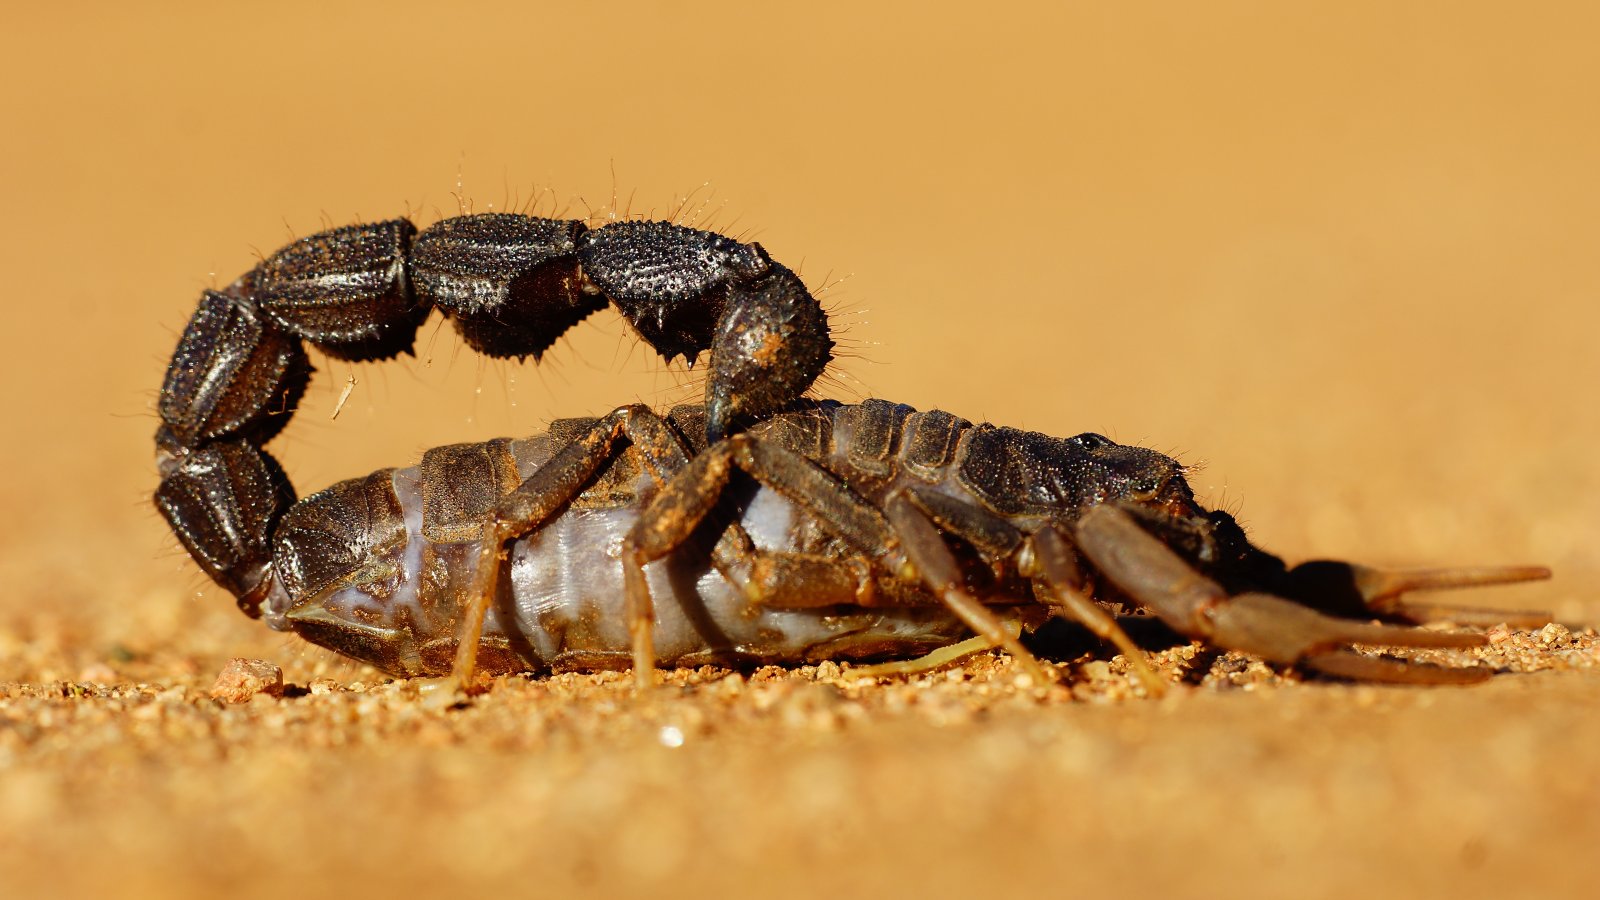 Scorpion in desert